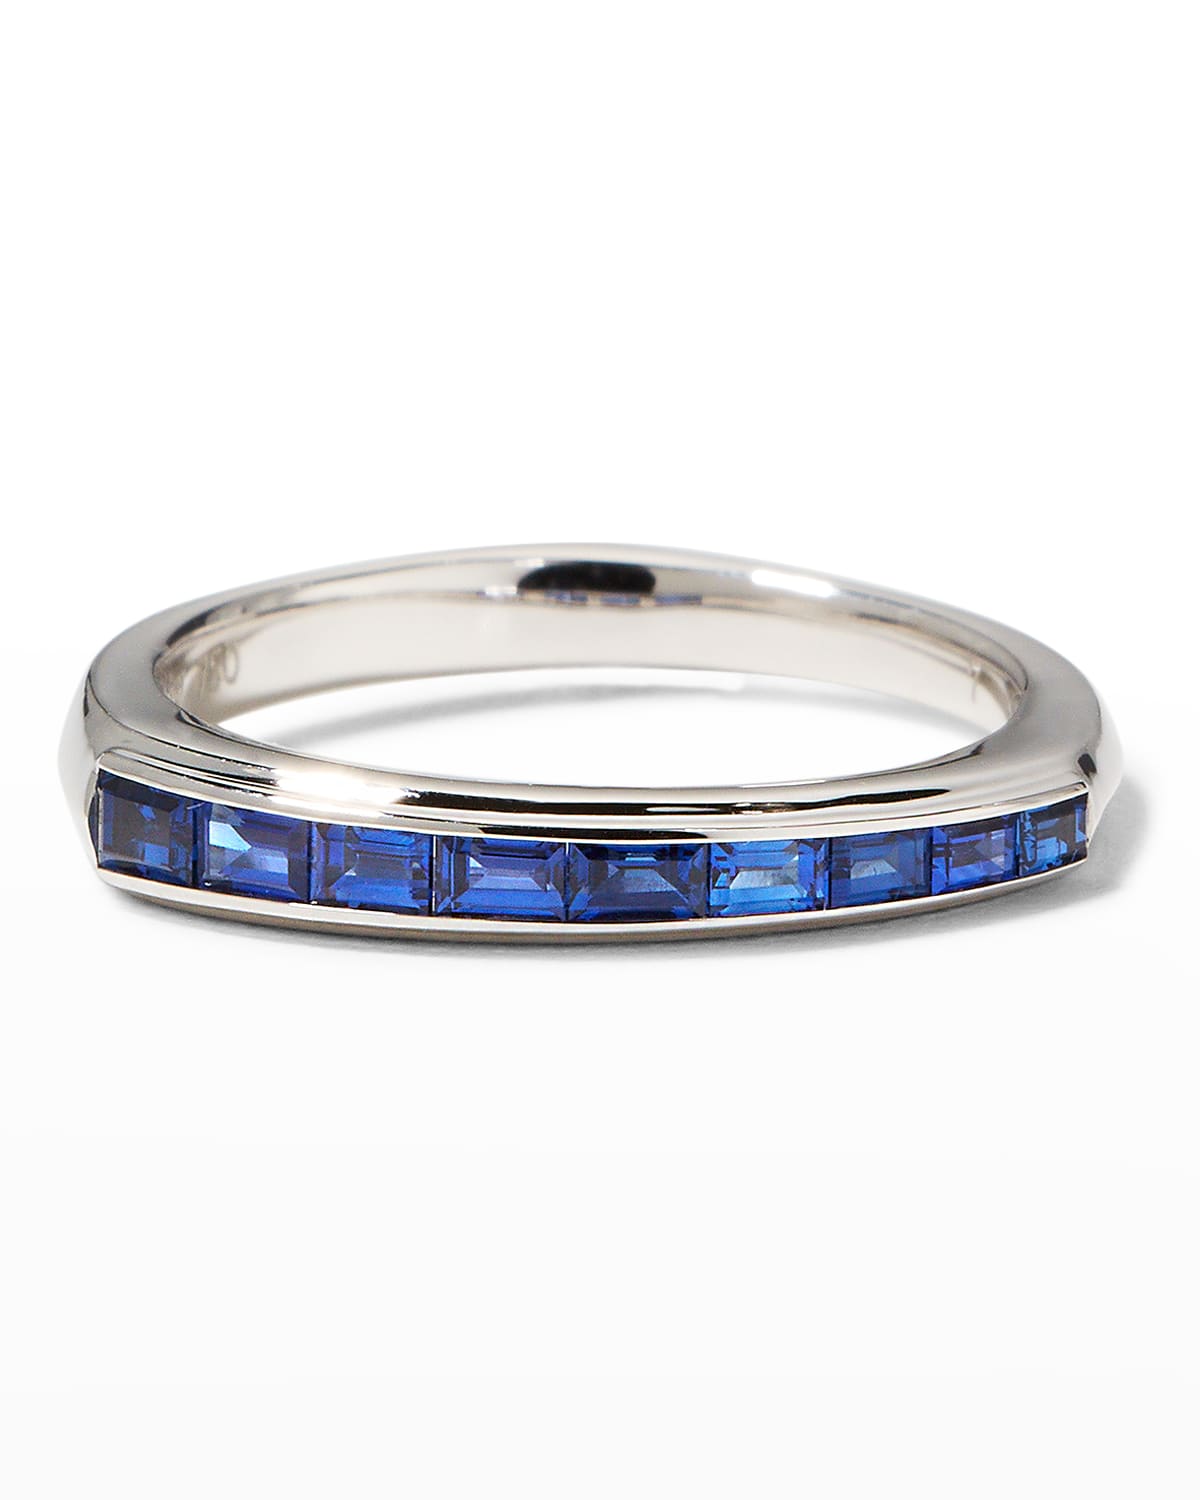 Stephen Webster Baguette Stack Ring With Blue Sapphires